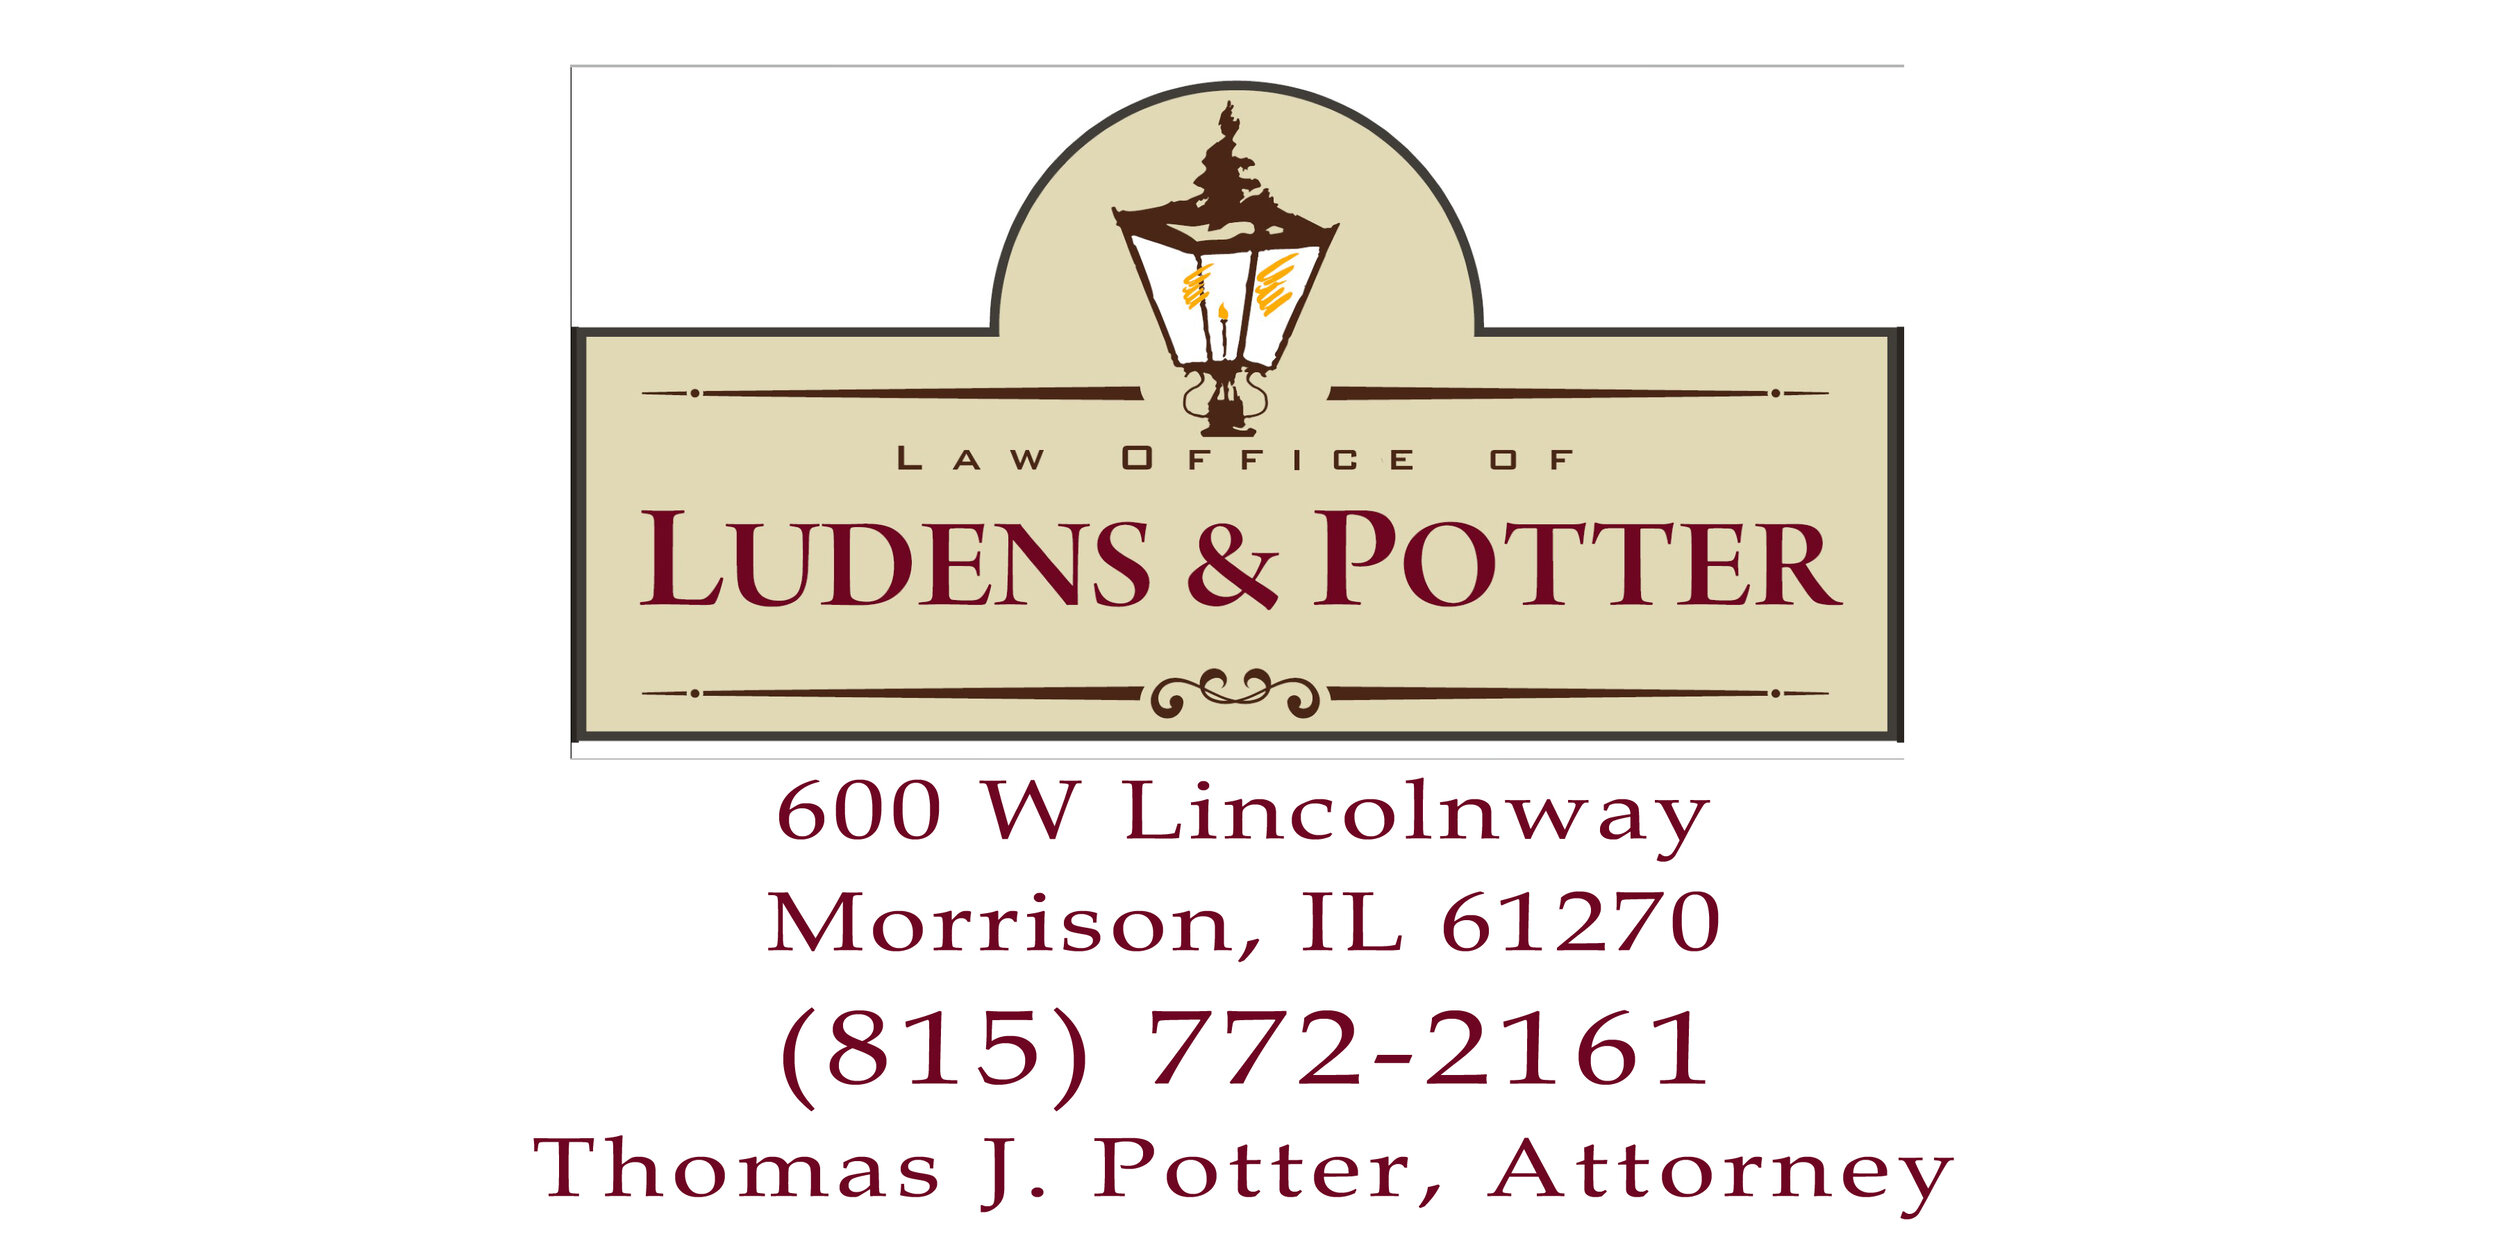 Ludens & Potter EDIT.jpg